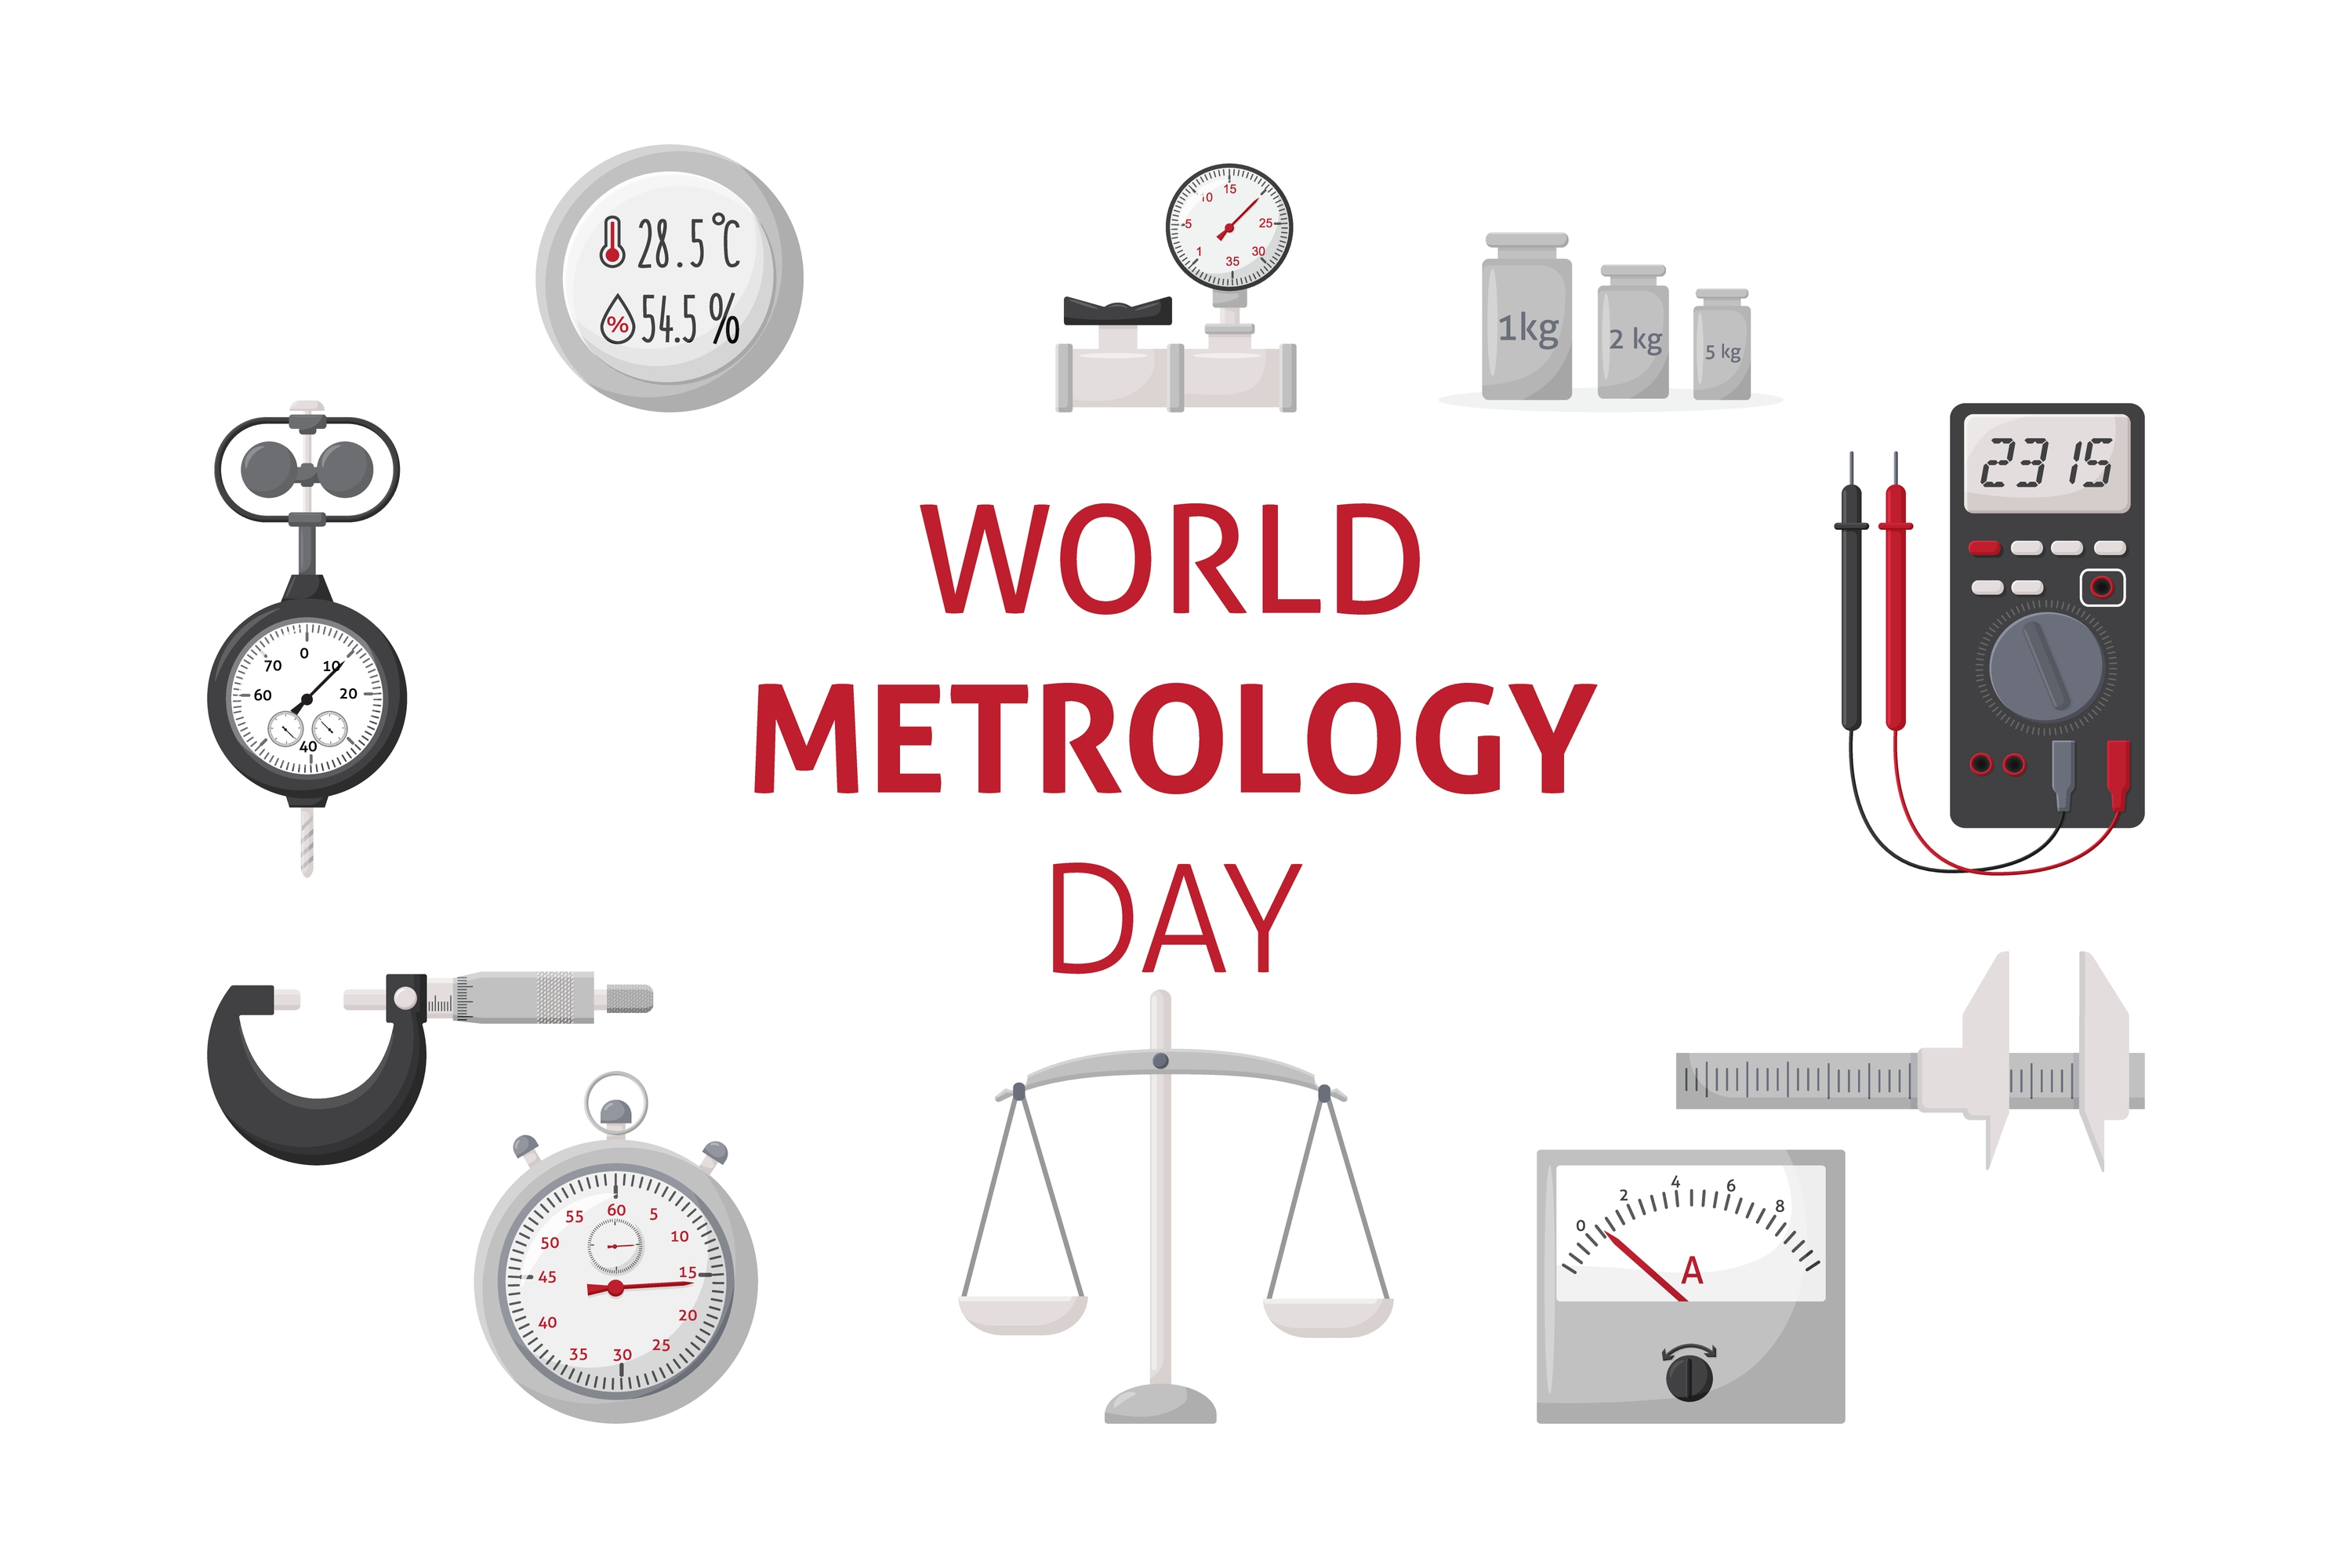 World Metrology Day: May 20th